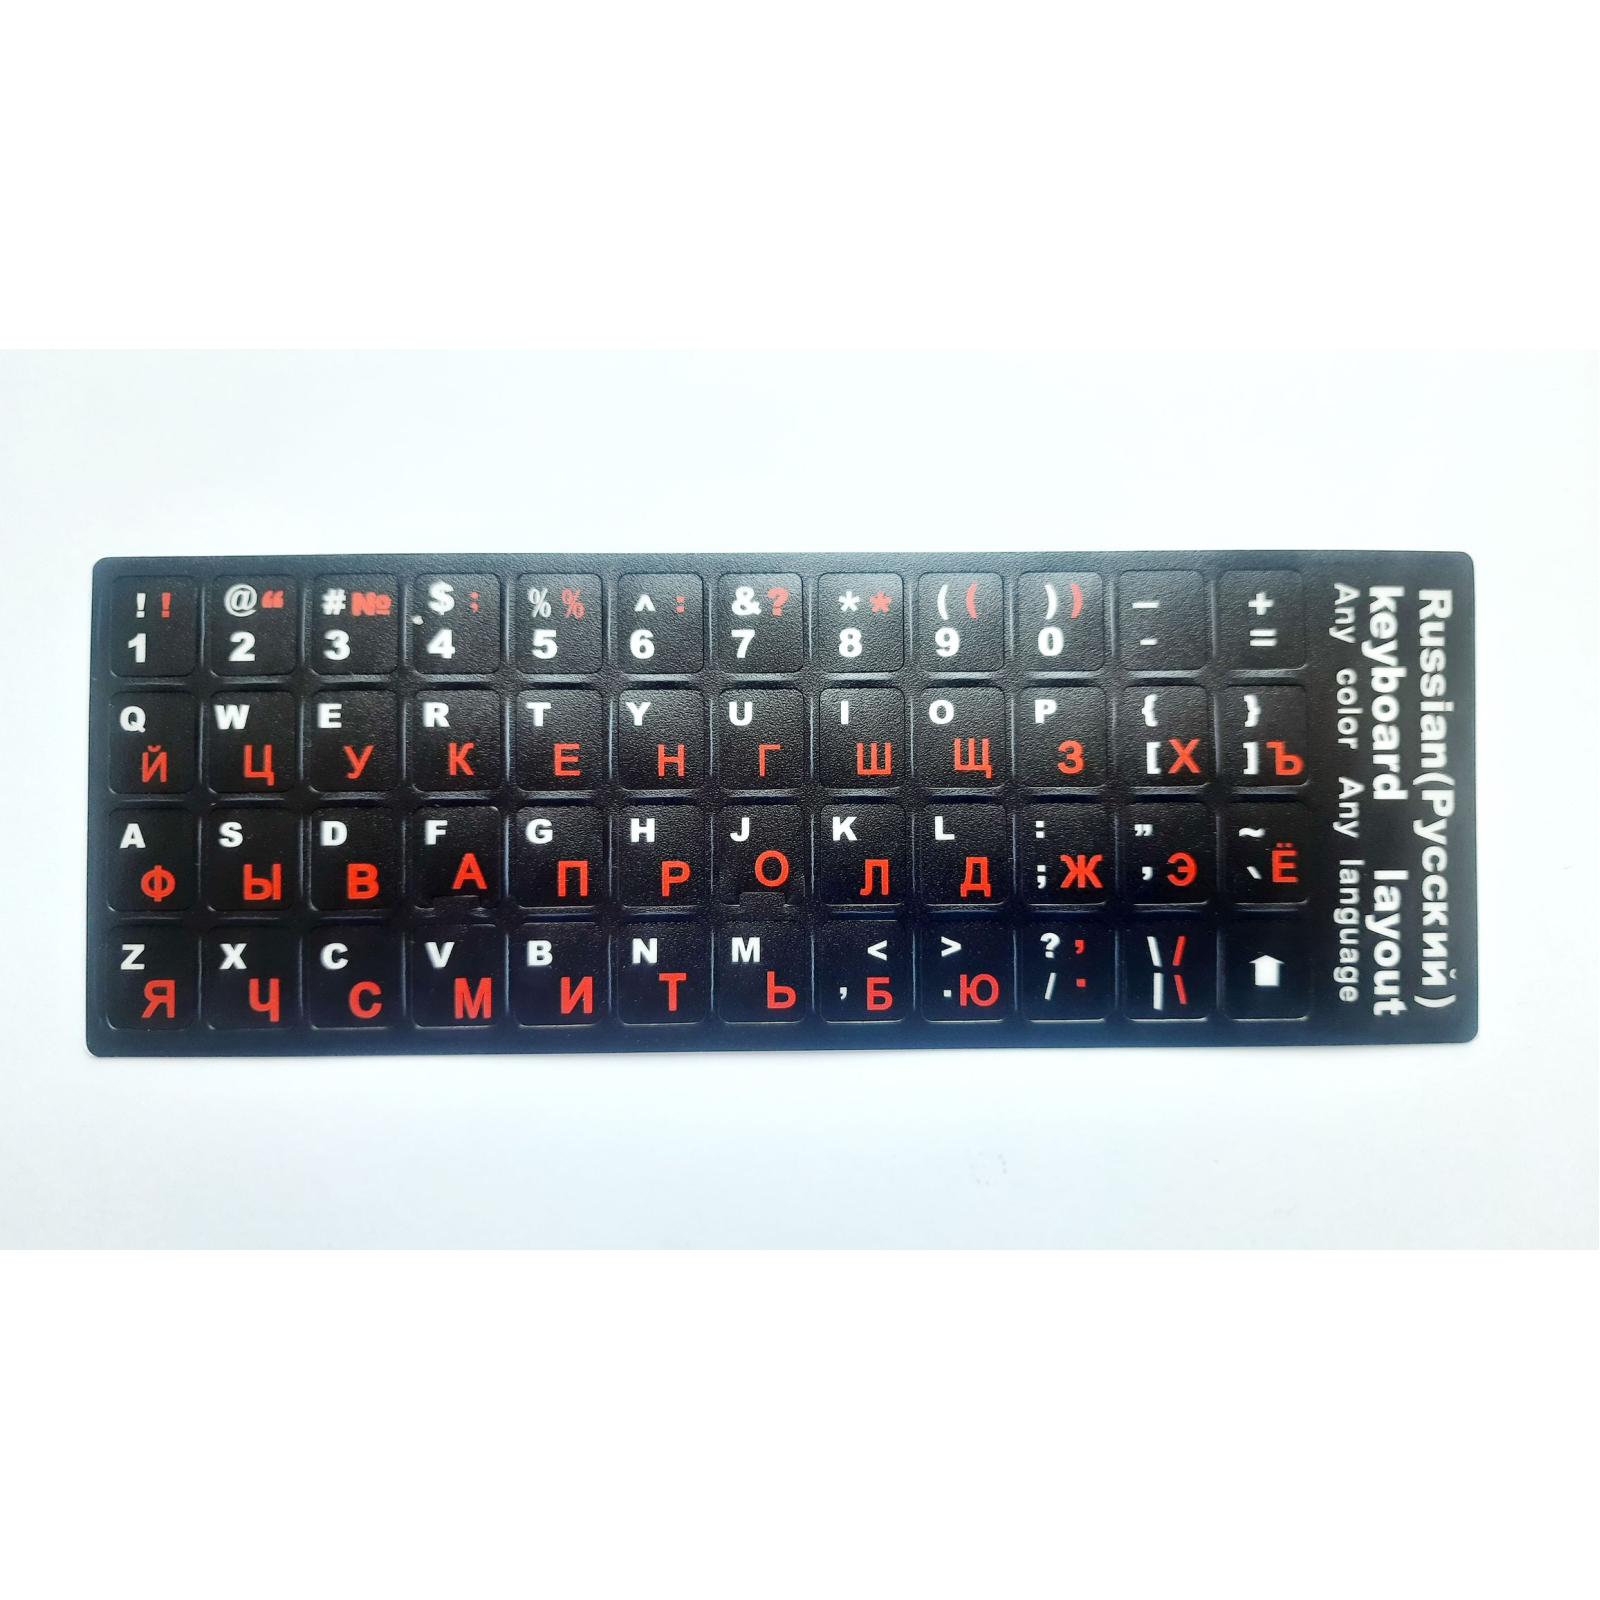 Наклейка на клавіатуру AlSoft непрозора EN/RU (11x13мм) чорна (кирилиця червона) textured (A43979)